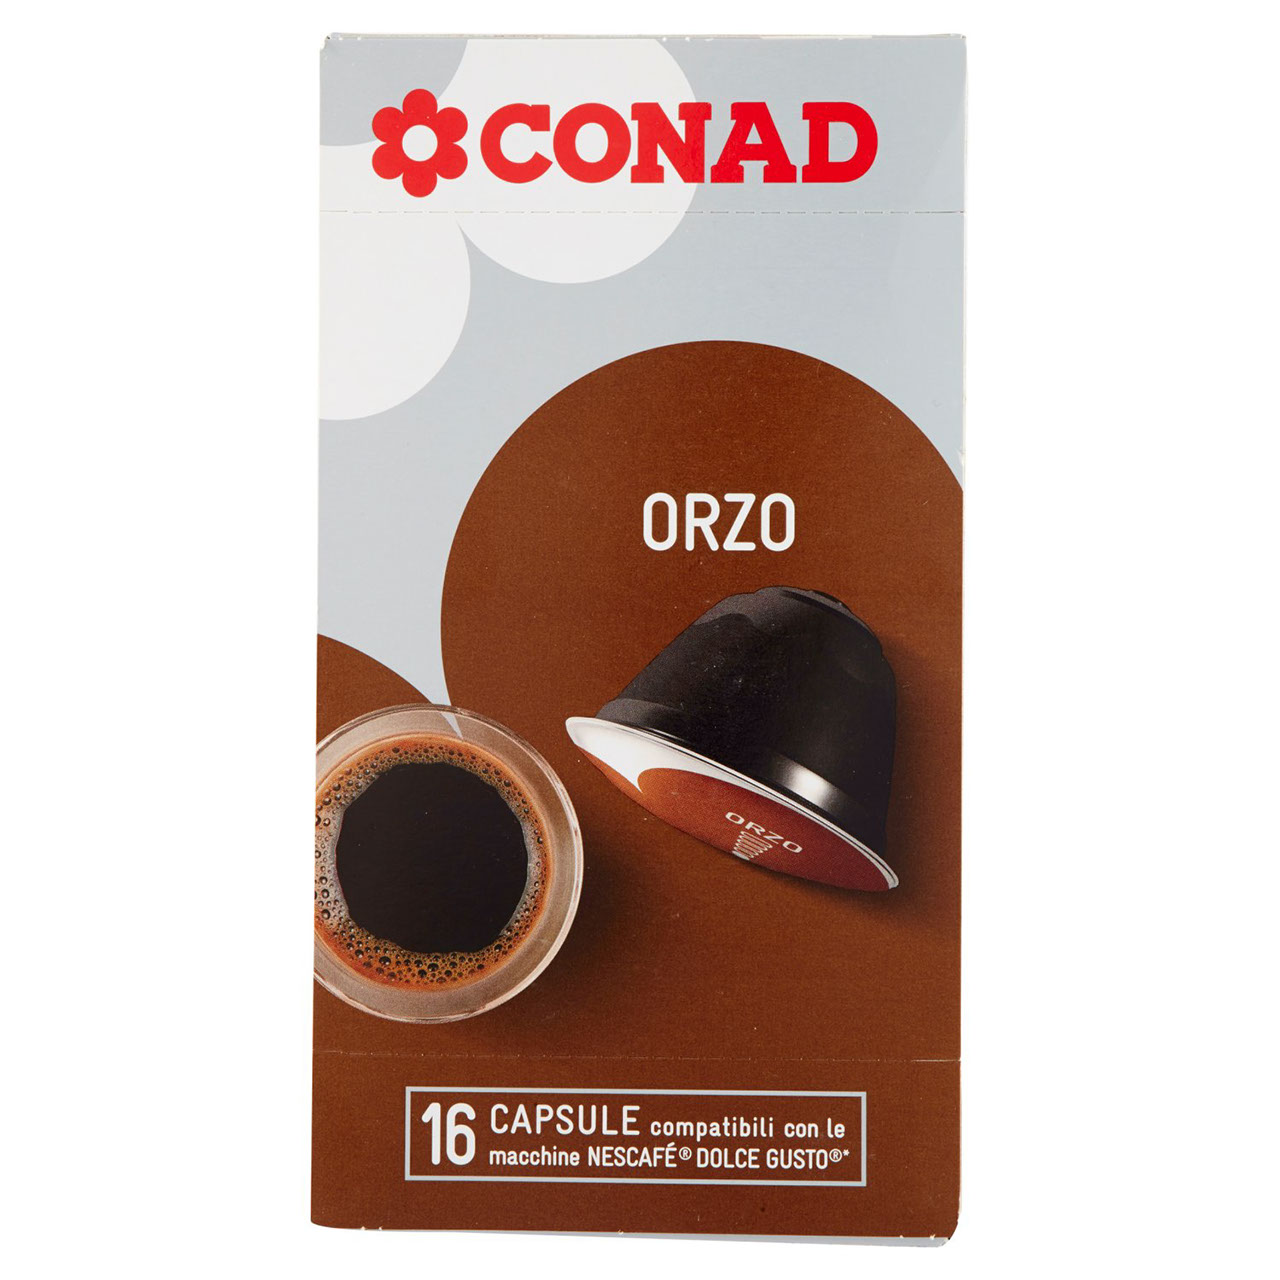 Orzo 16 capsule Conad in vendita  online